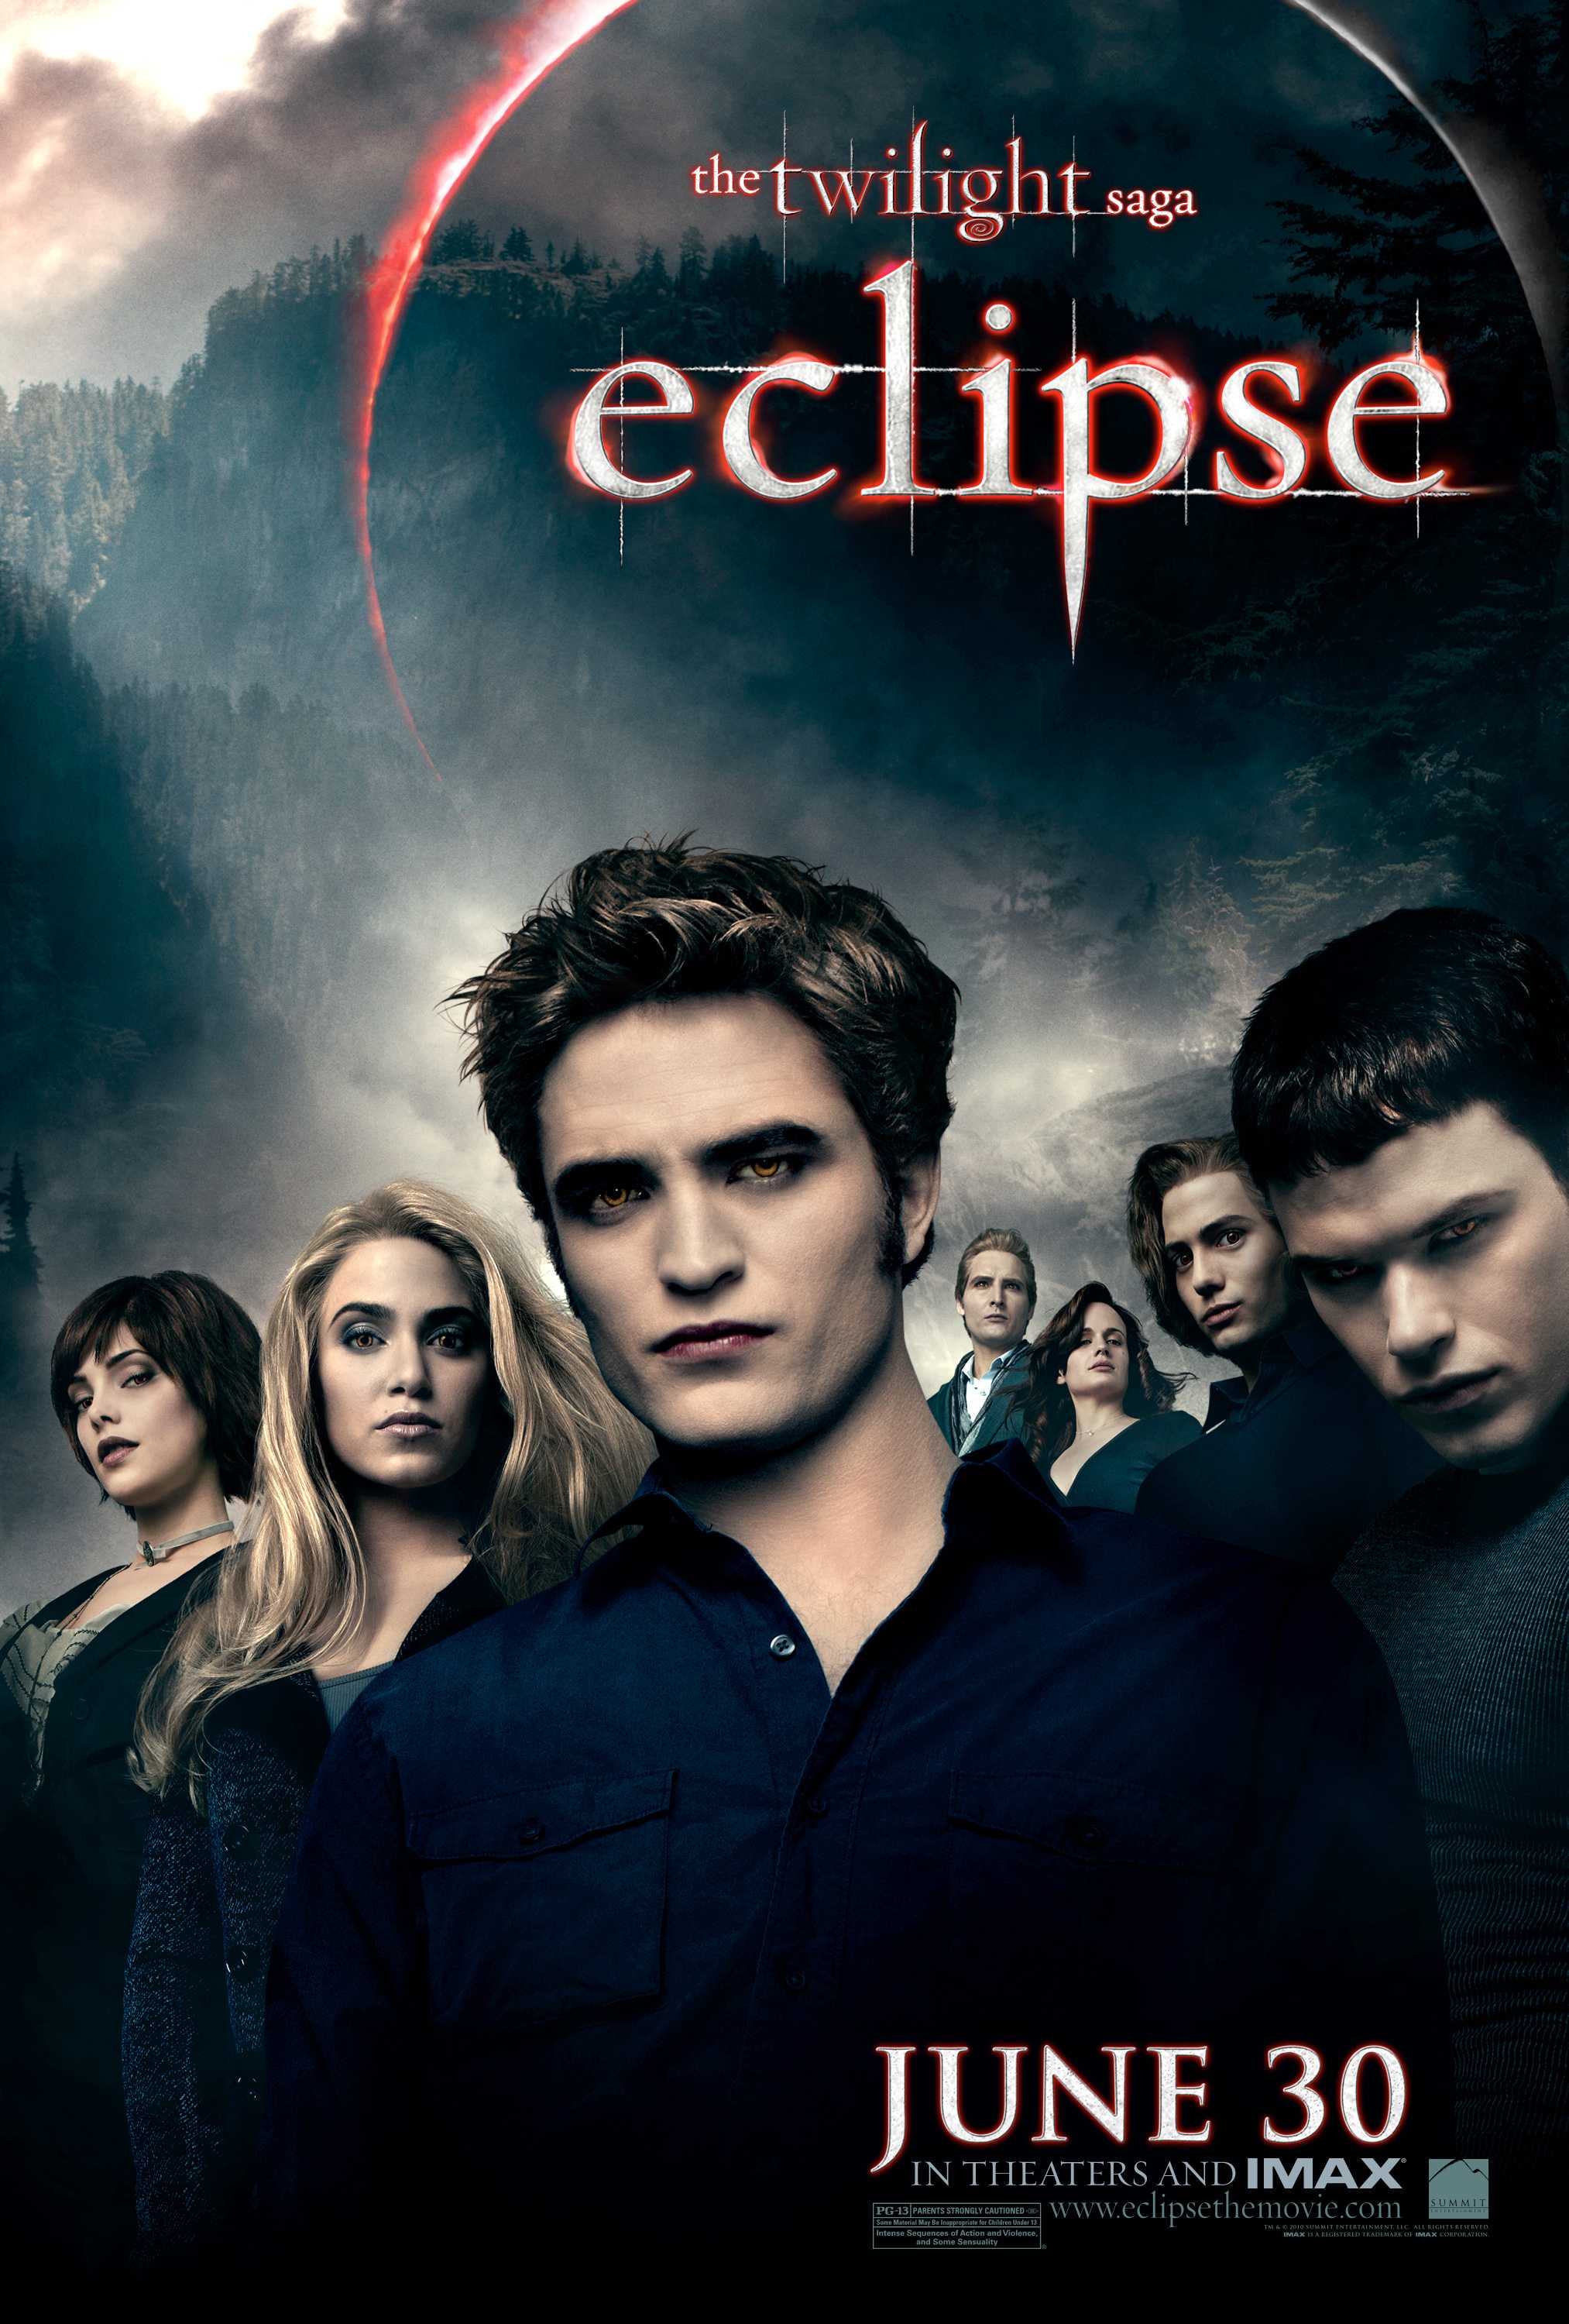 The Twilight Saga: Eclipse #10